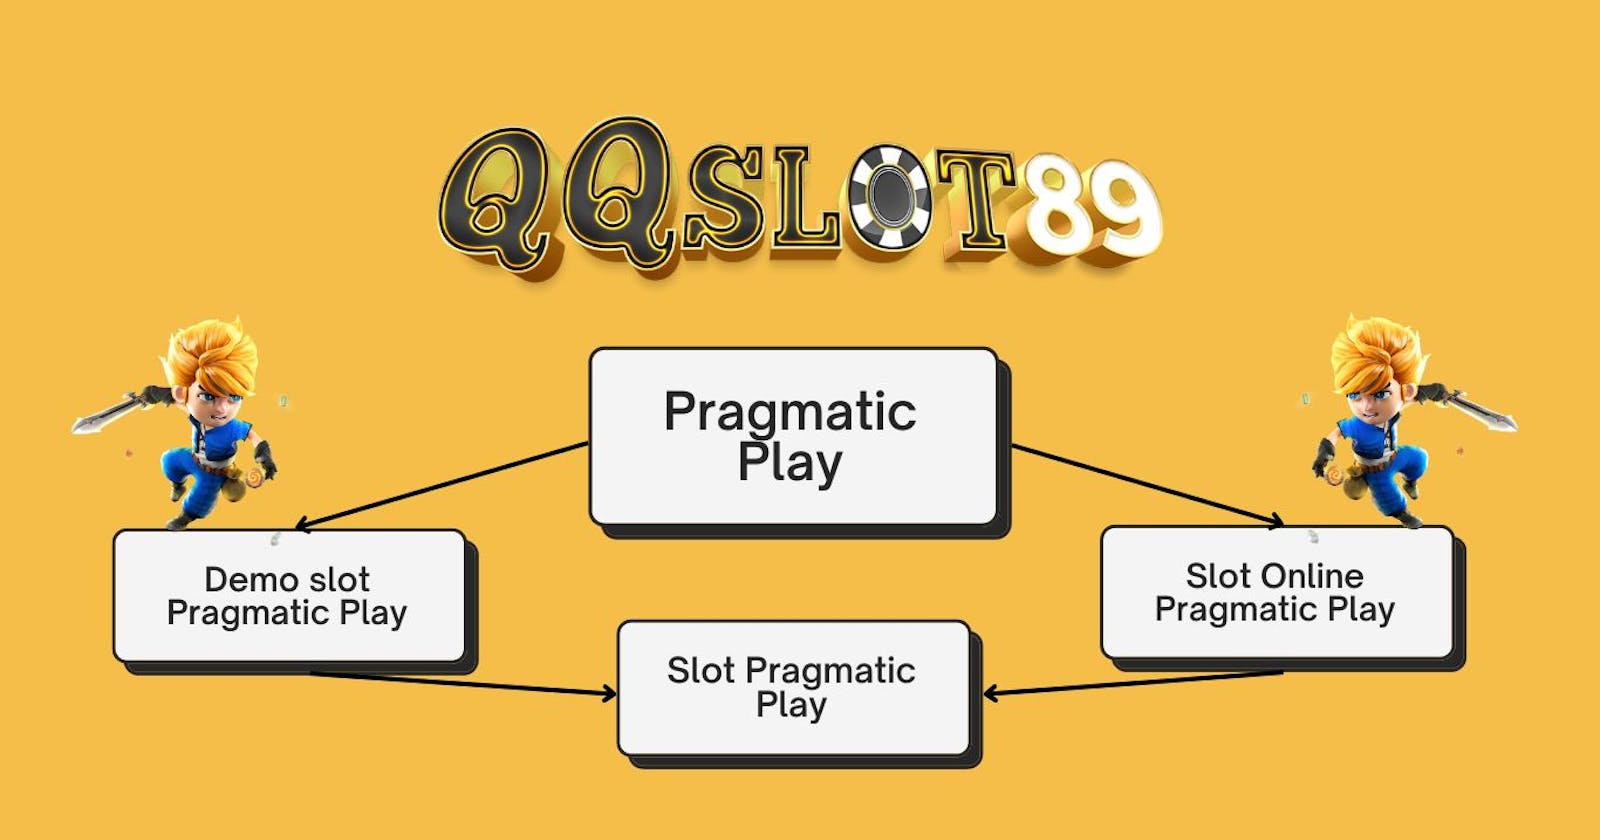 Pragmatic Play, Demo Slot Pragmatic Play, Slot Pragmatic Play - 2023